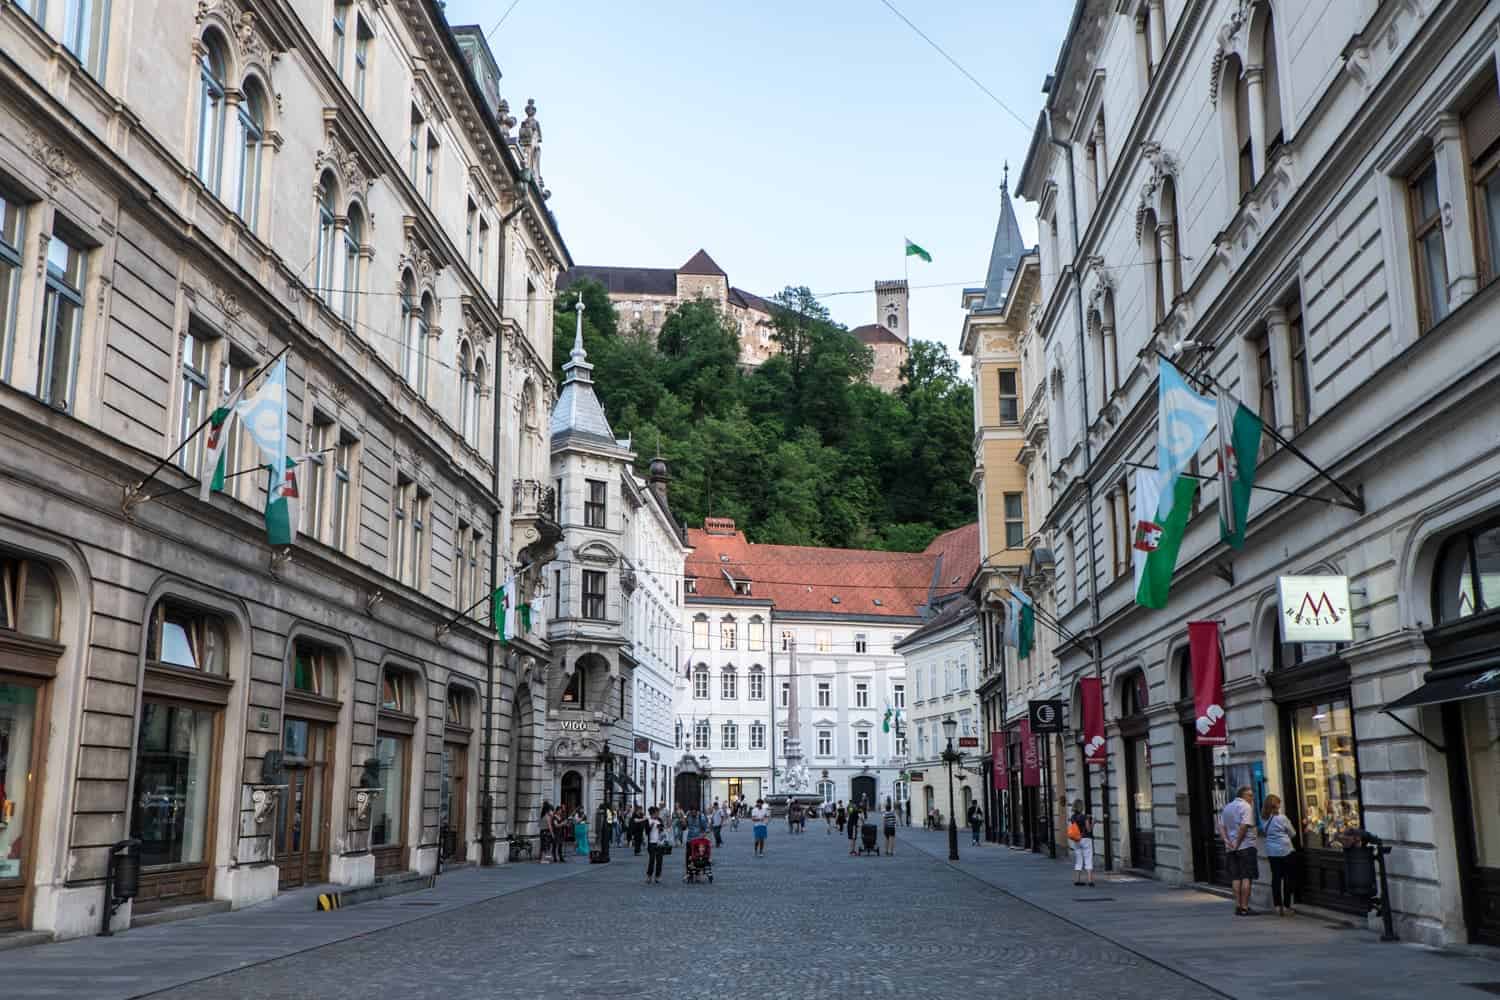 Street view to Ljubljana castle on the hill